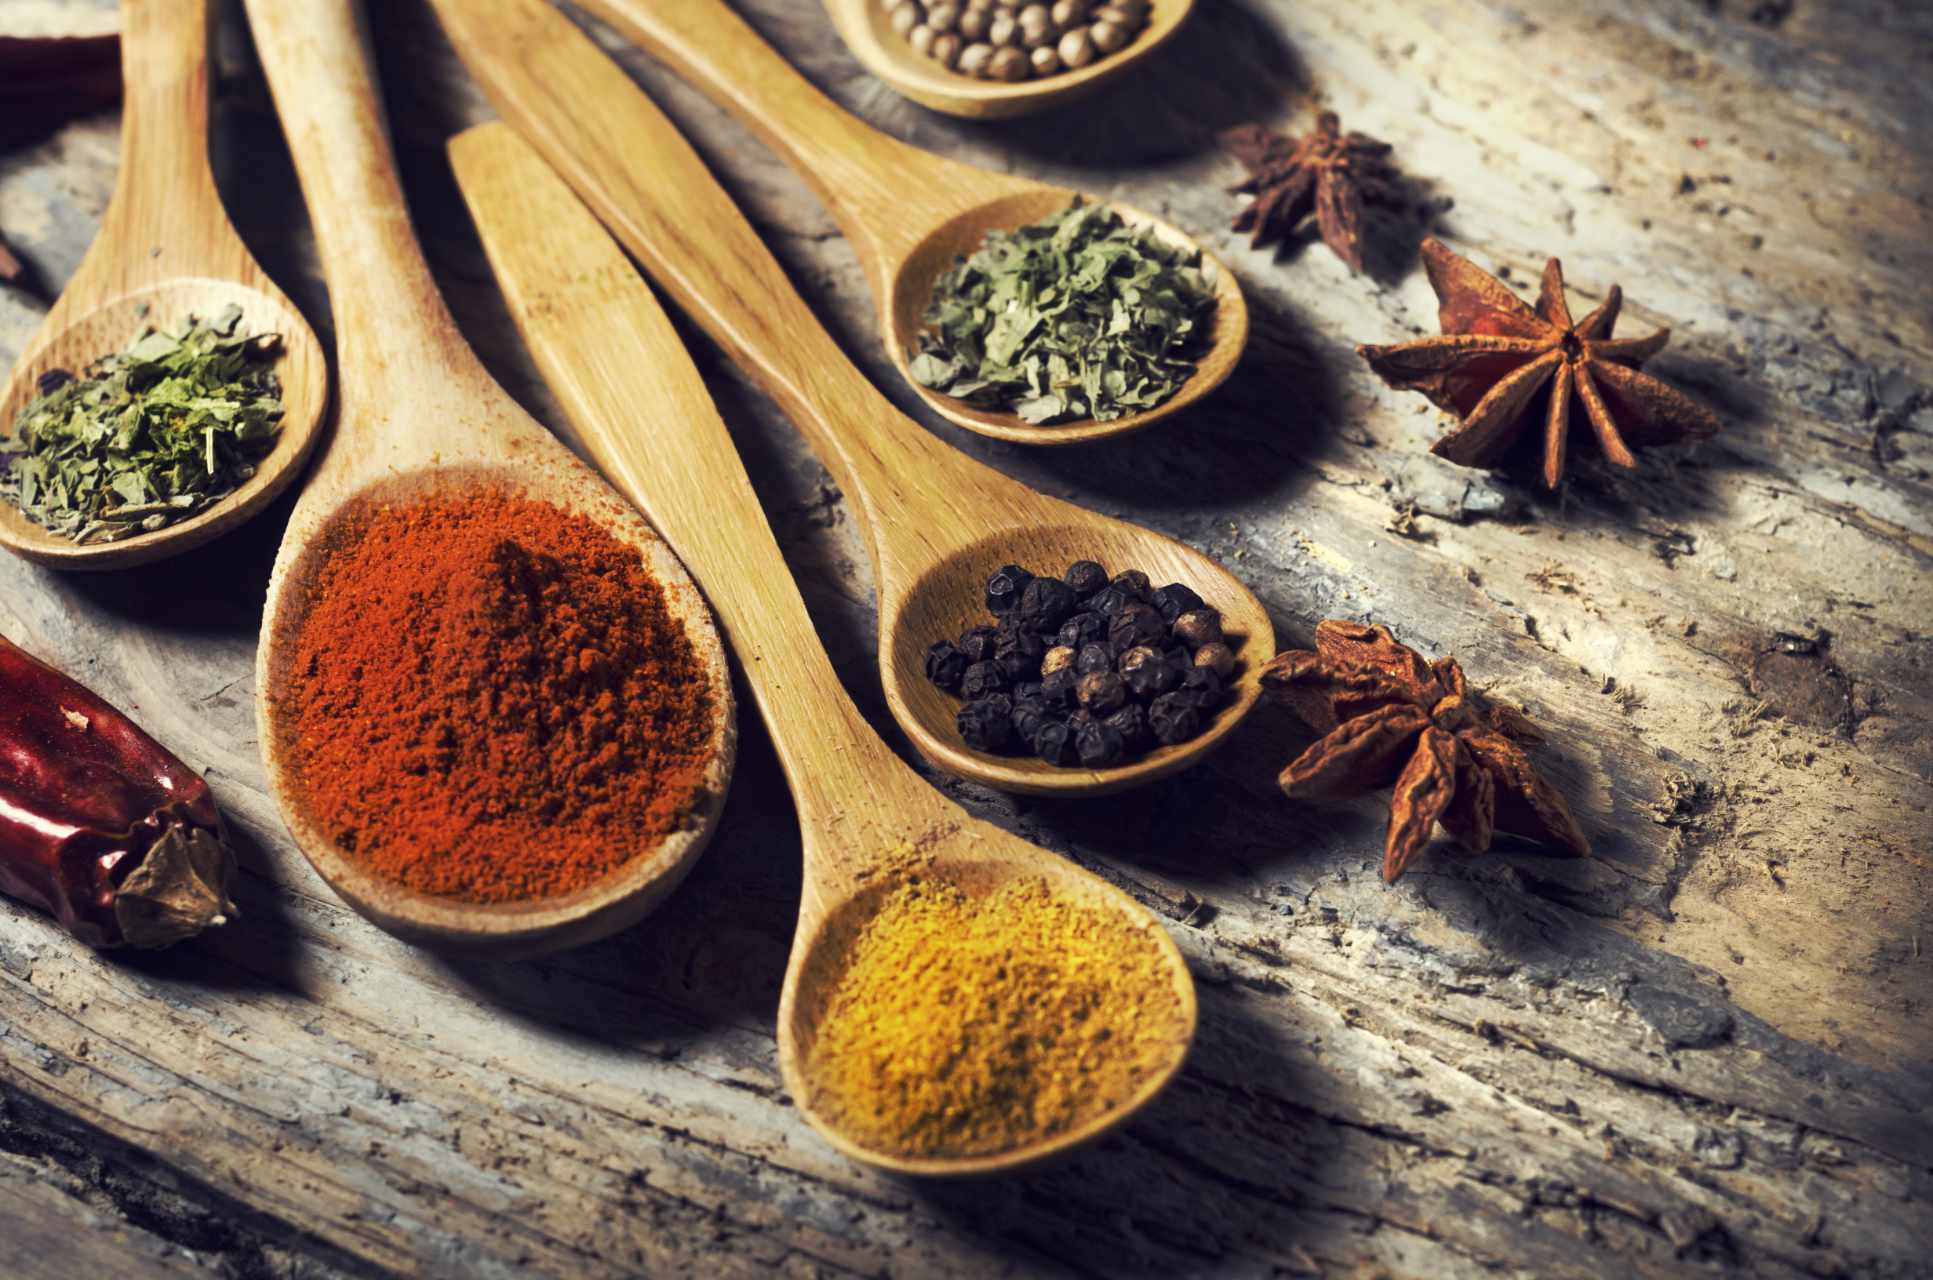 Antica-drogheria - Riso al curry e spezie indiane